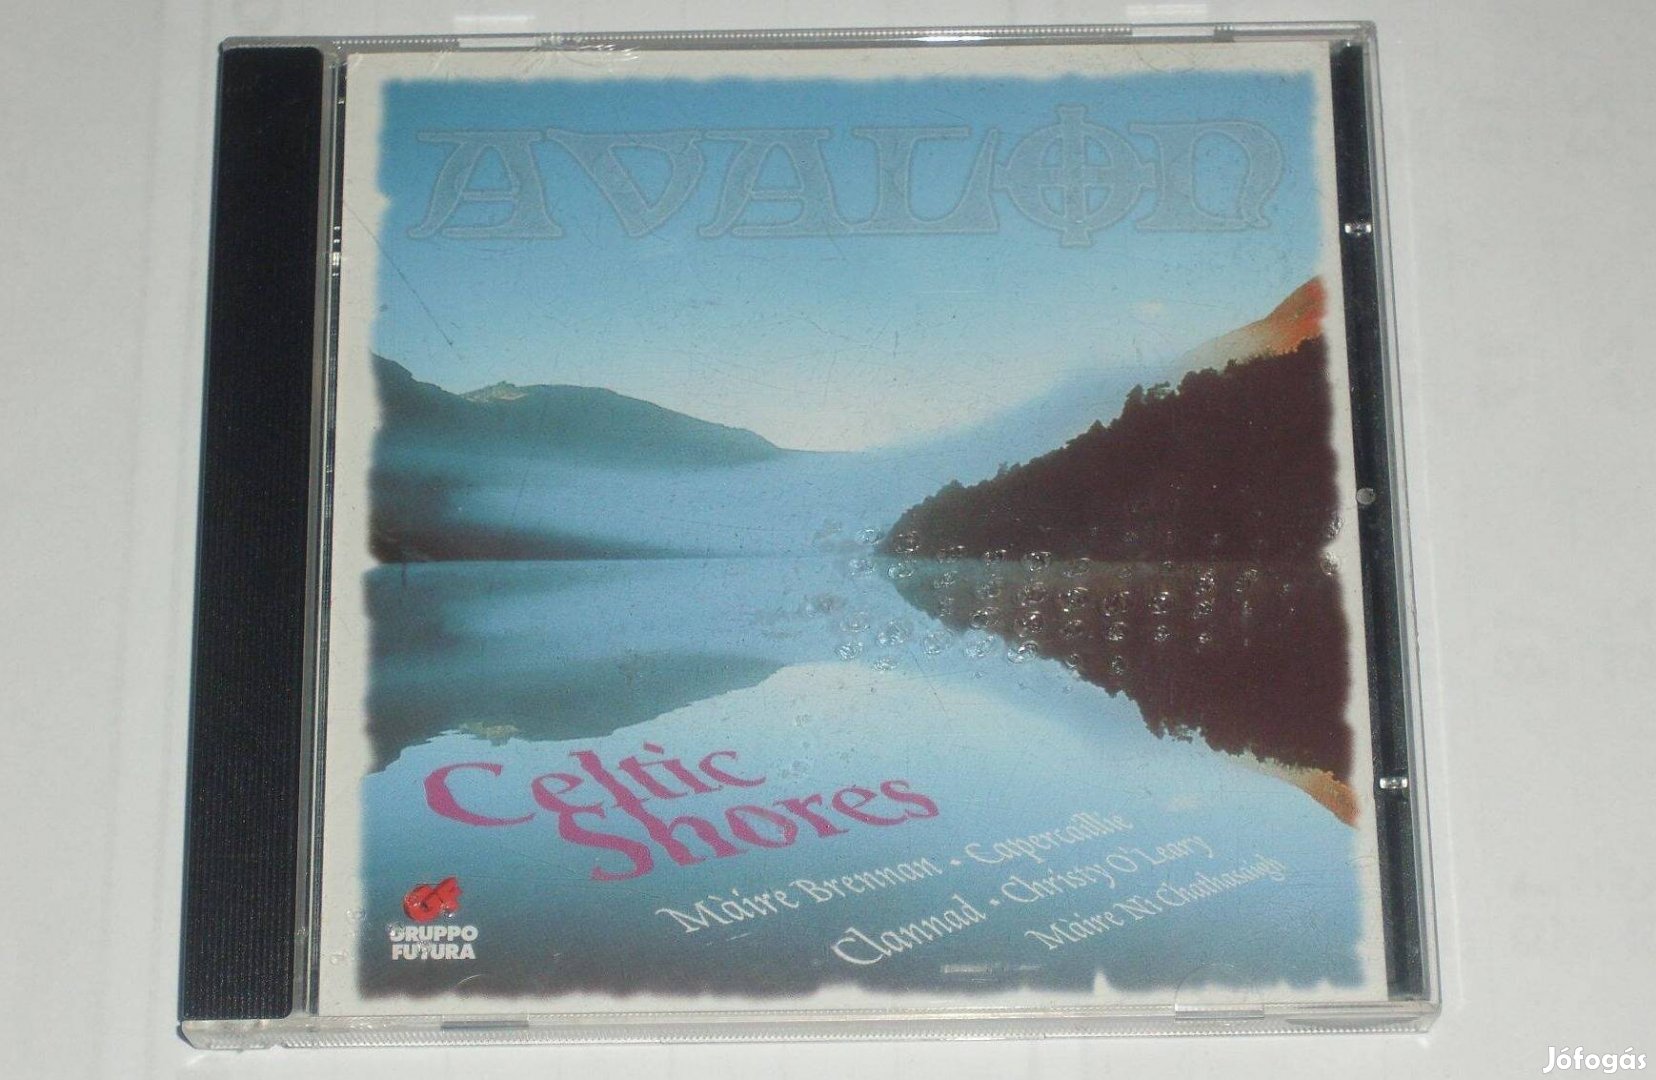 Various - Avalon: Celtic Shores CD